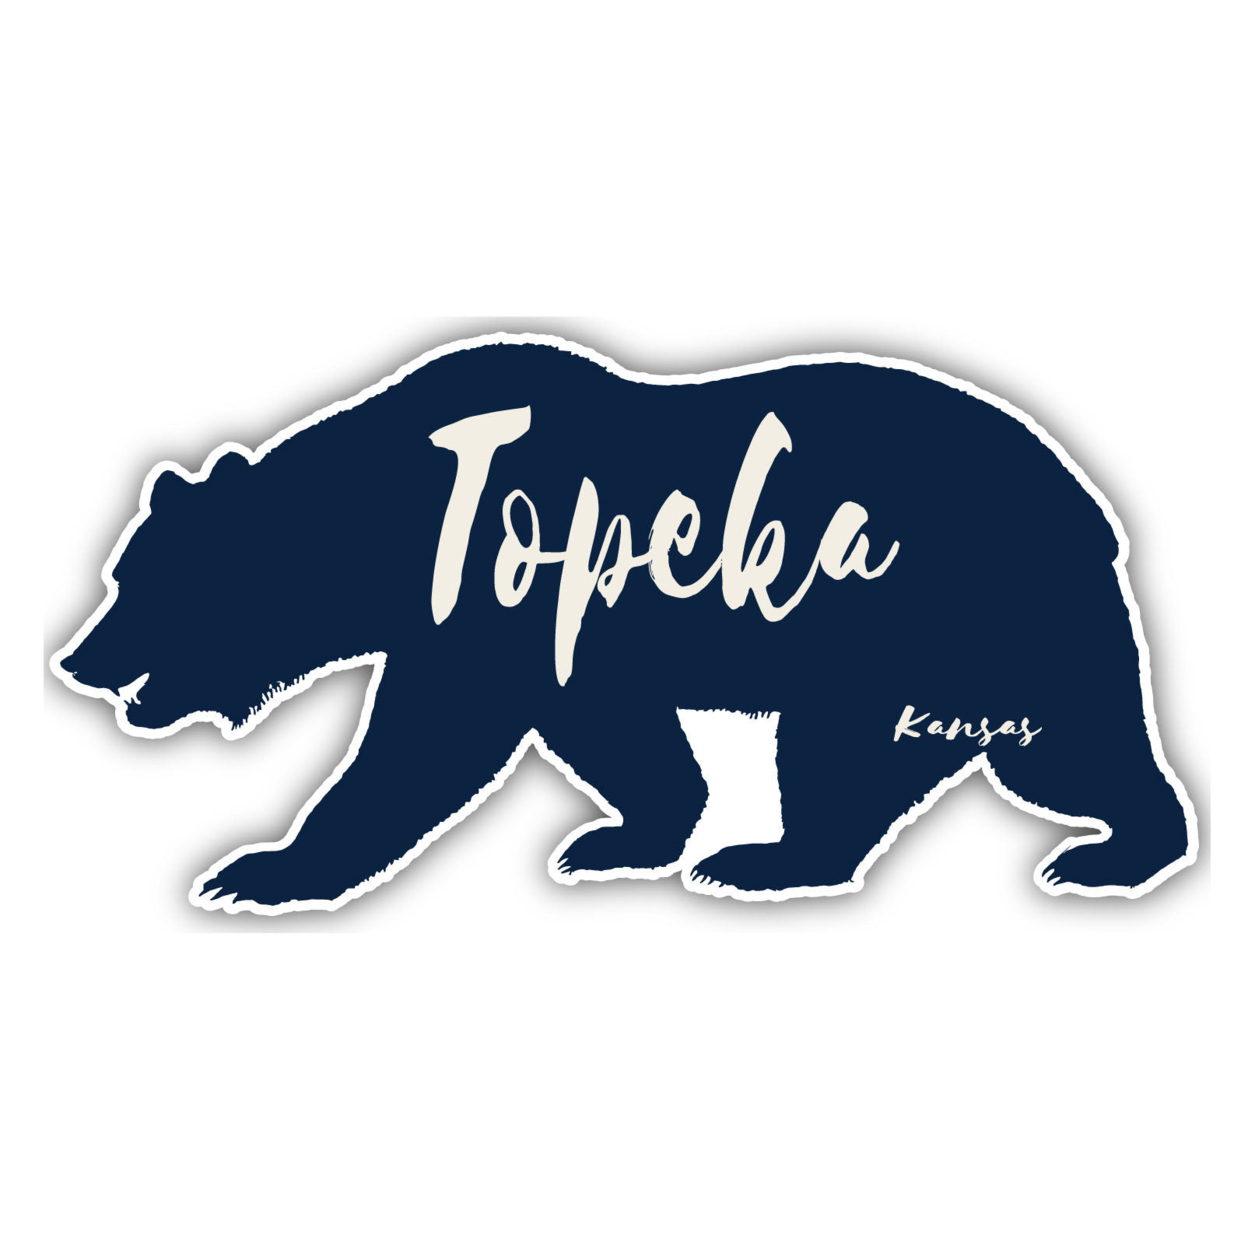 Topeka Kansas Souvenir Decorative Stickers (Choose Theme And Size) - Single Unit, 2-Inch, Bear